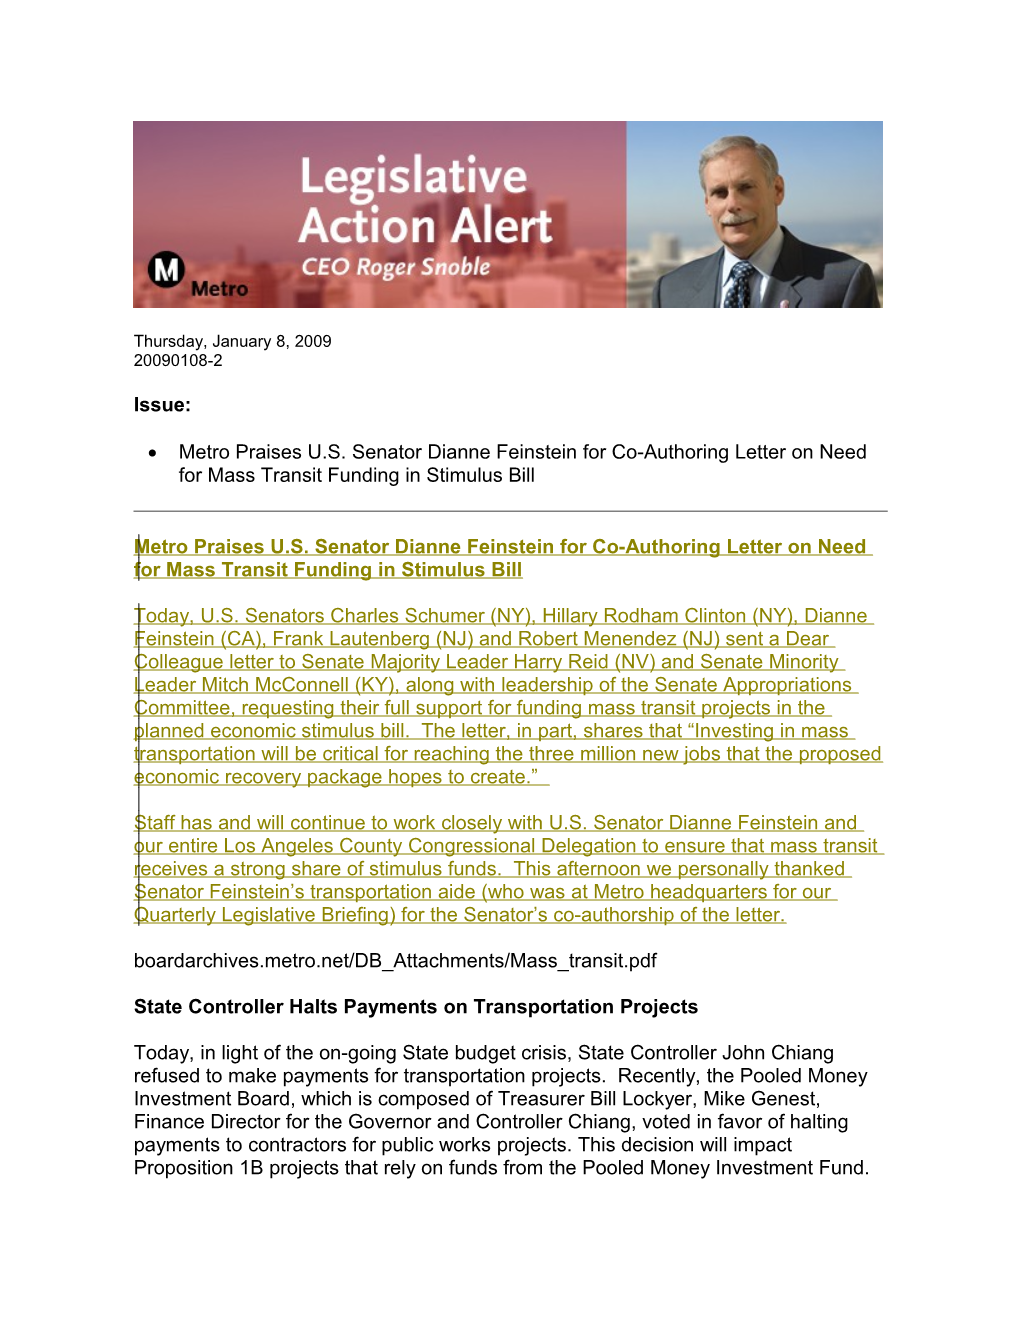 Legislative Action Alert - January 8, 2009